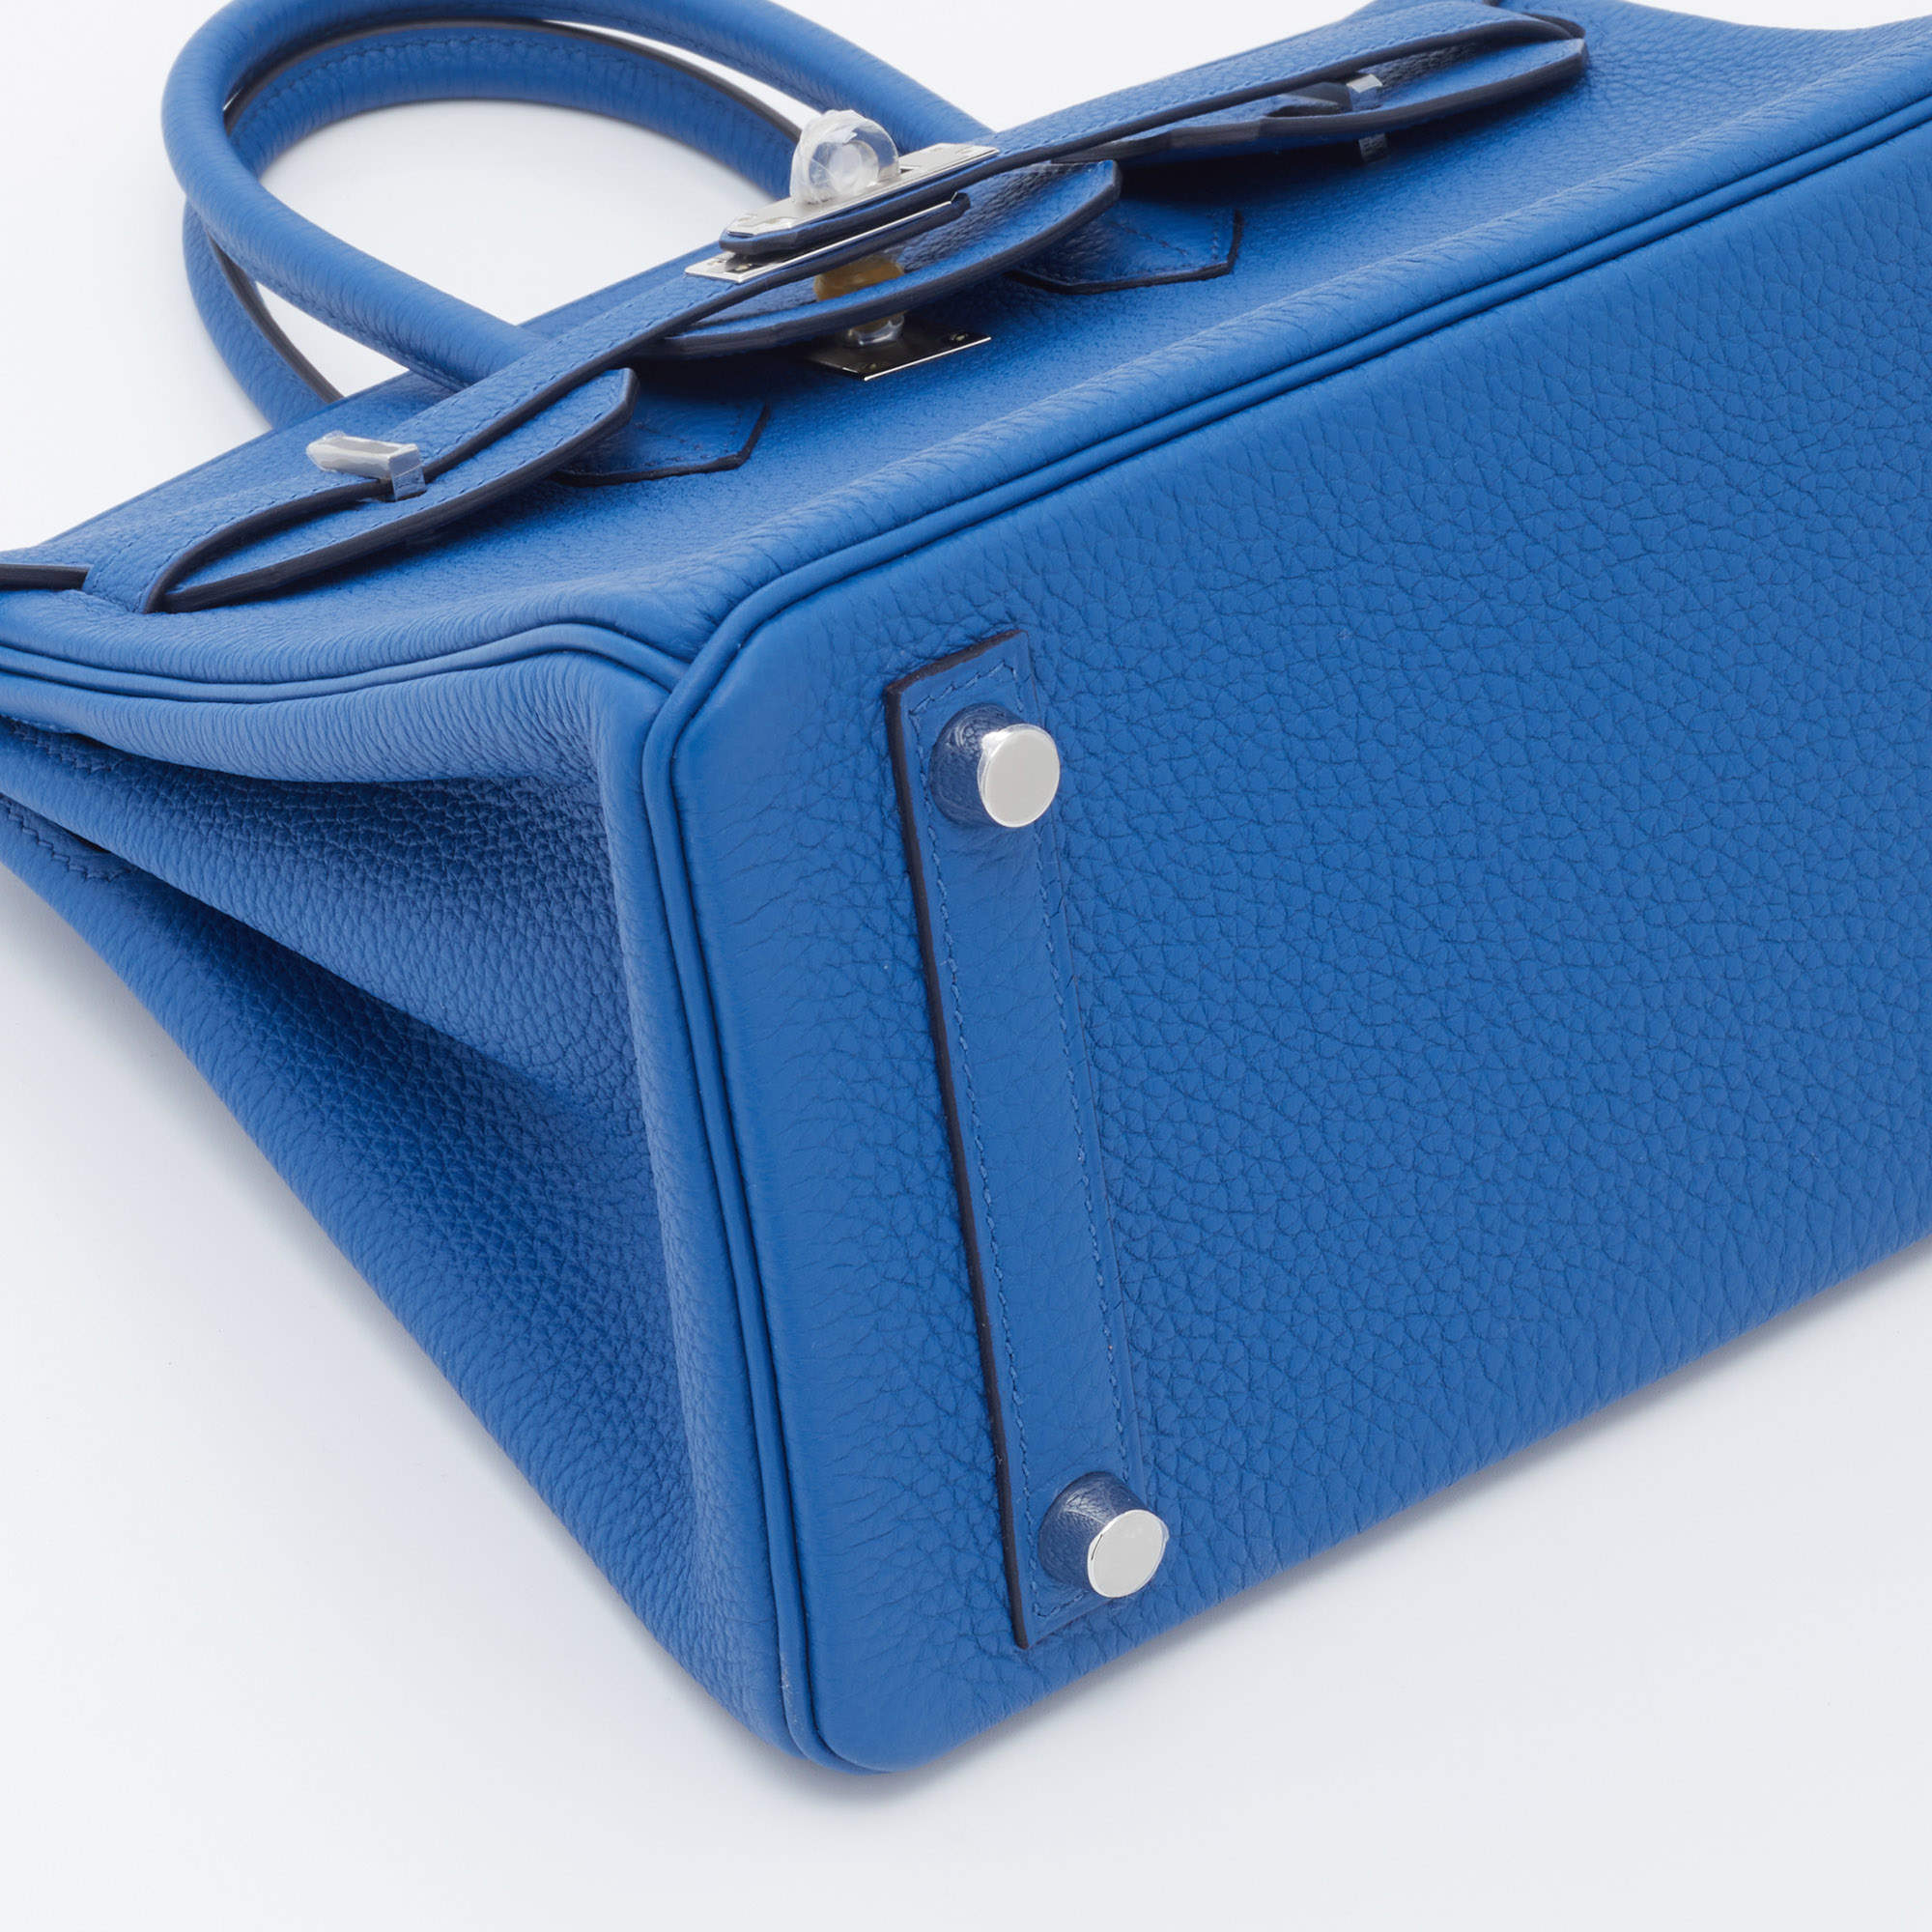 HERMÈS Birkin 25 handbag in Blue Lin Togo leather with Beige de